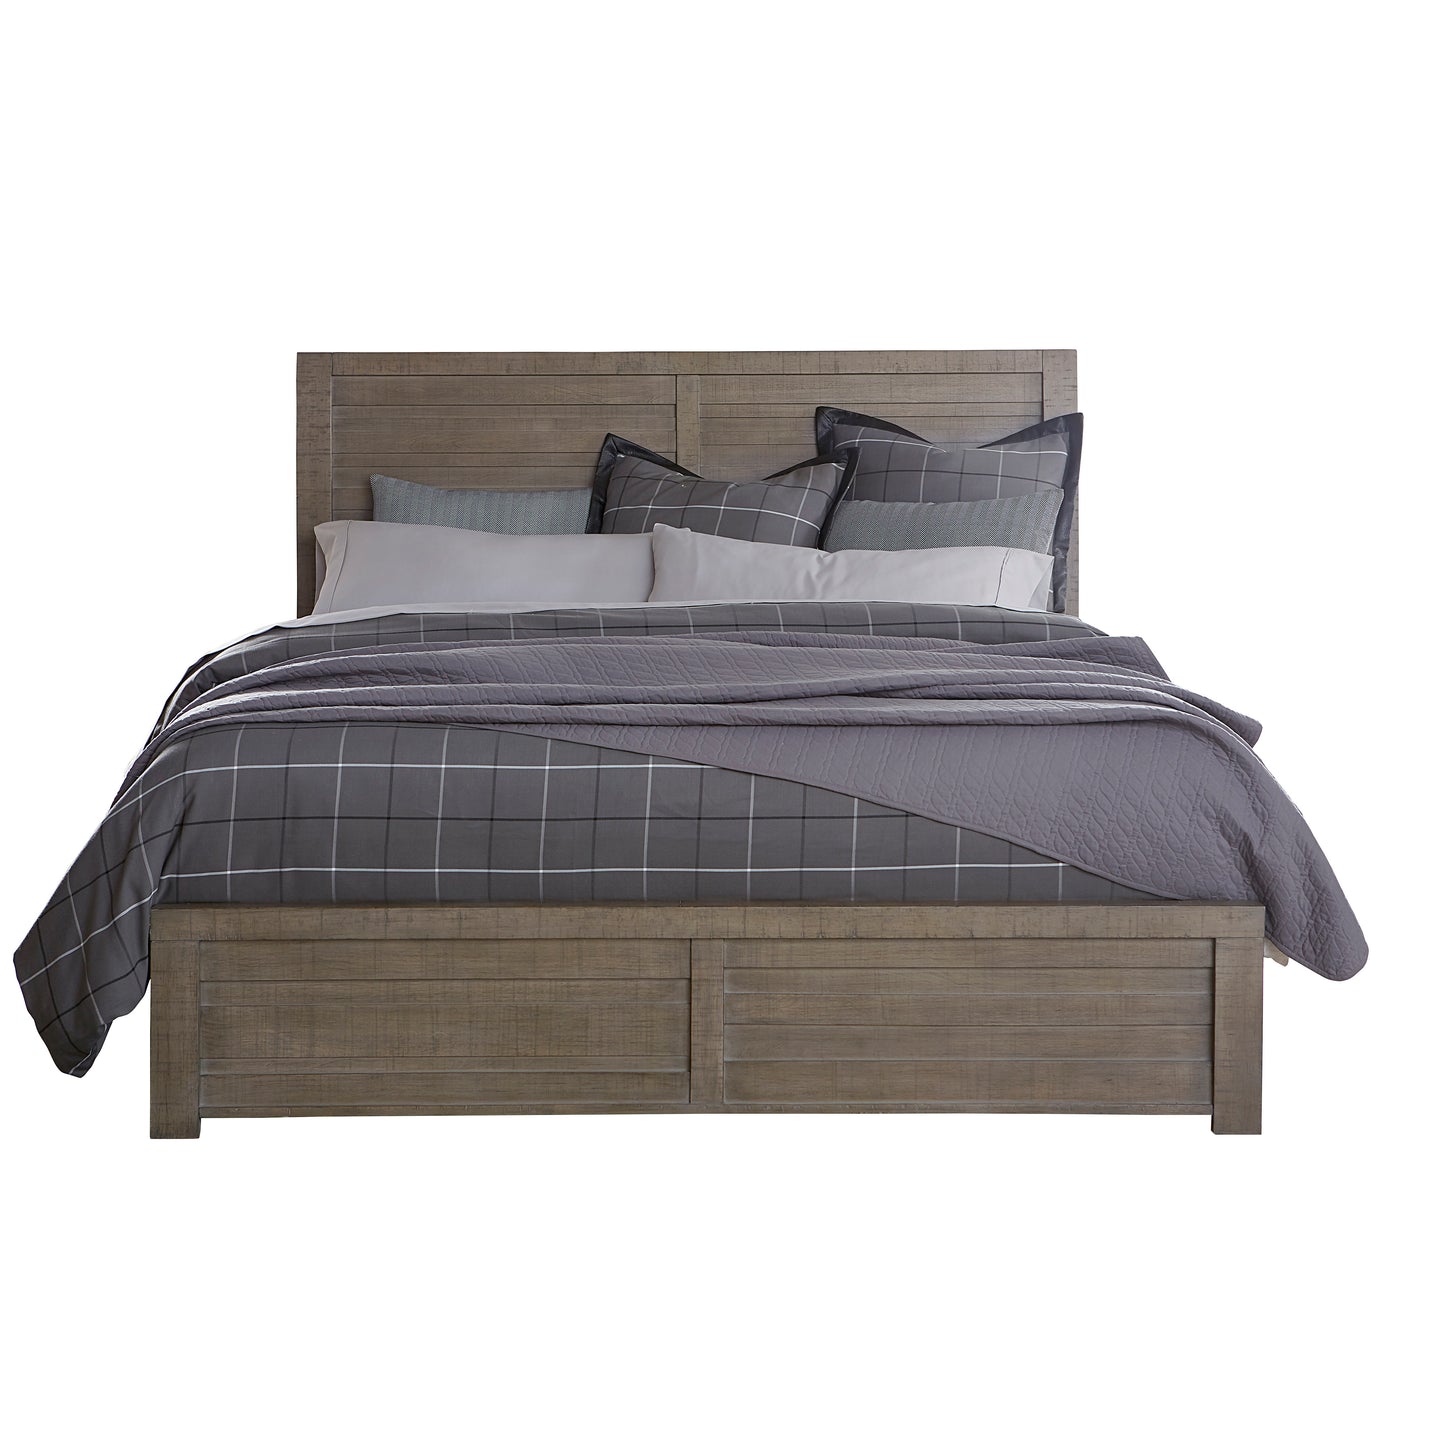 Sedona Transitional Medium Gray Wood Panel Bed